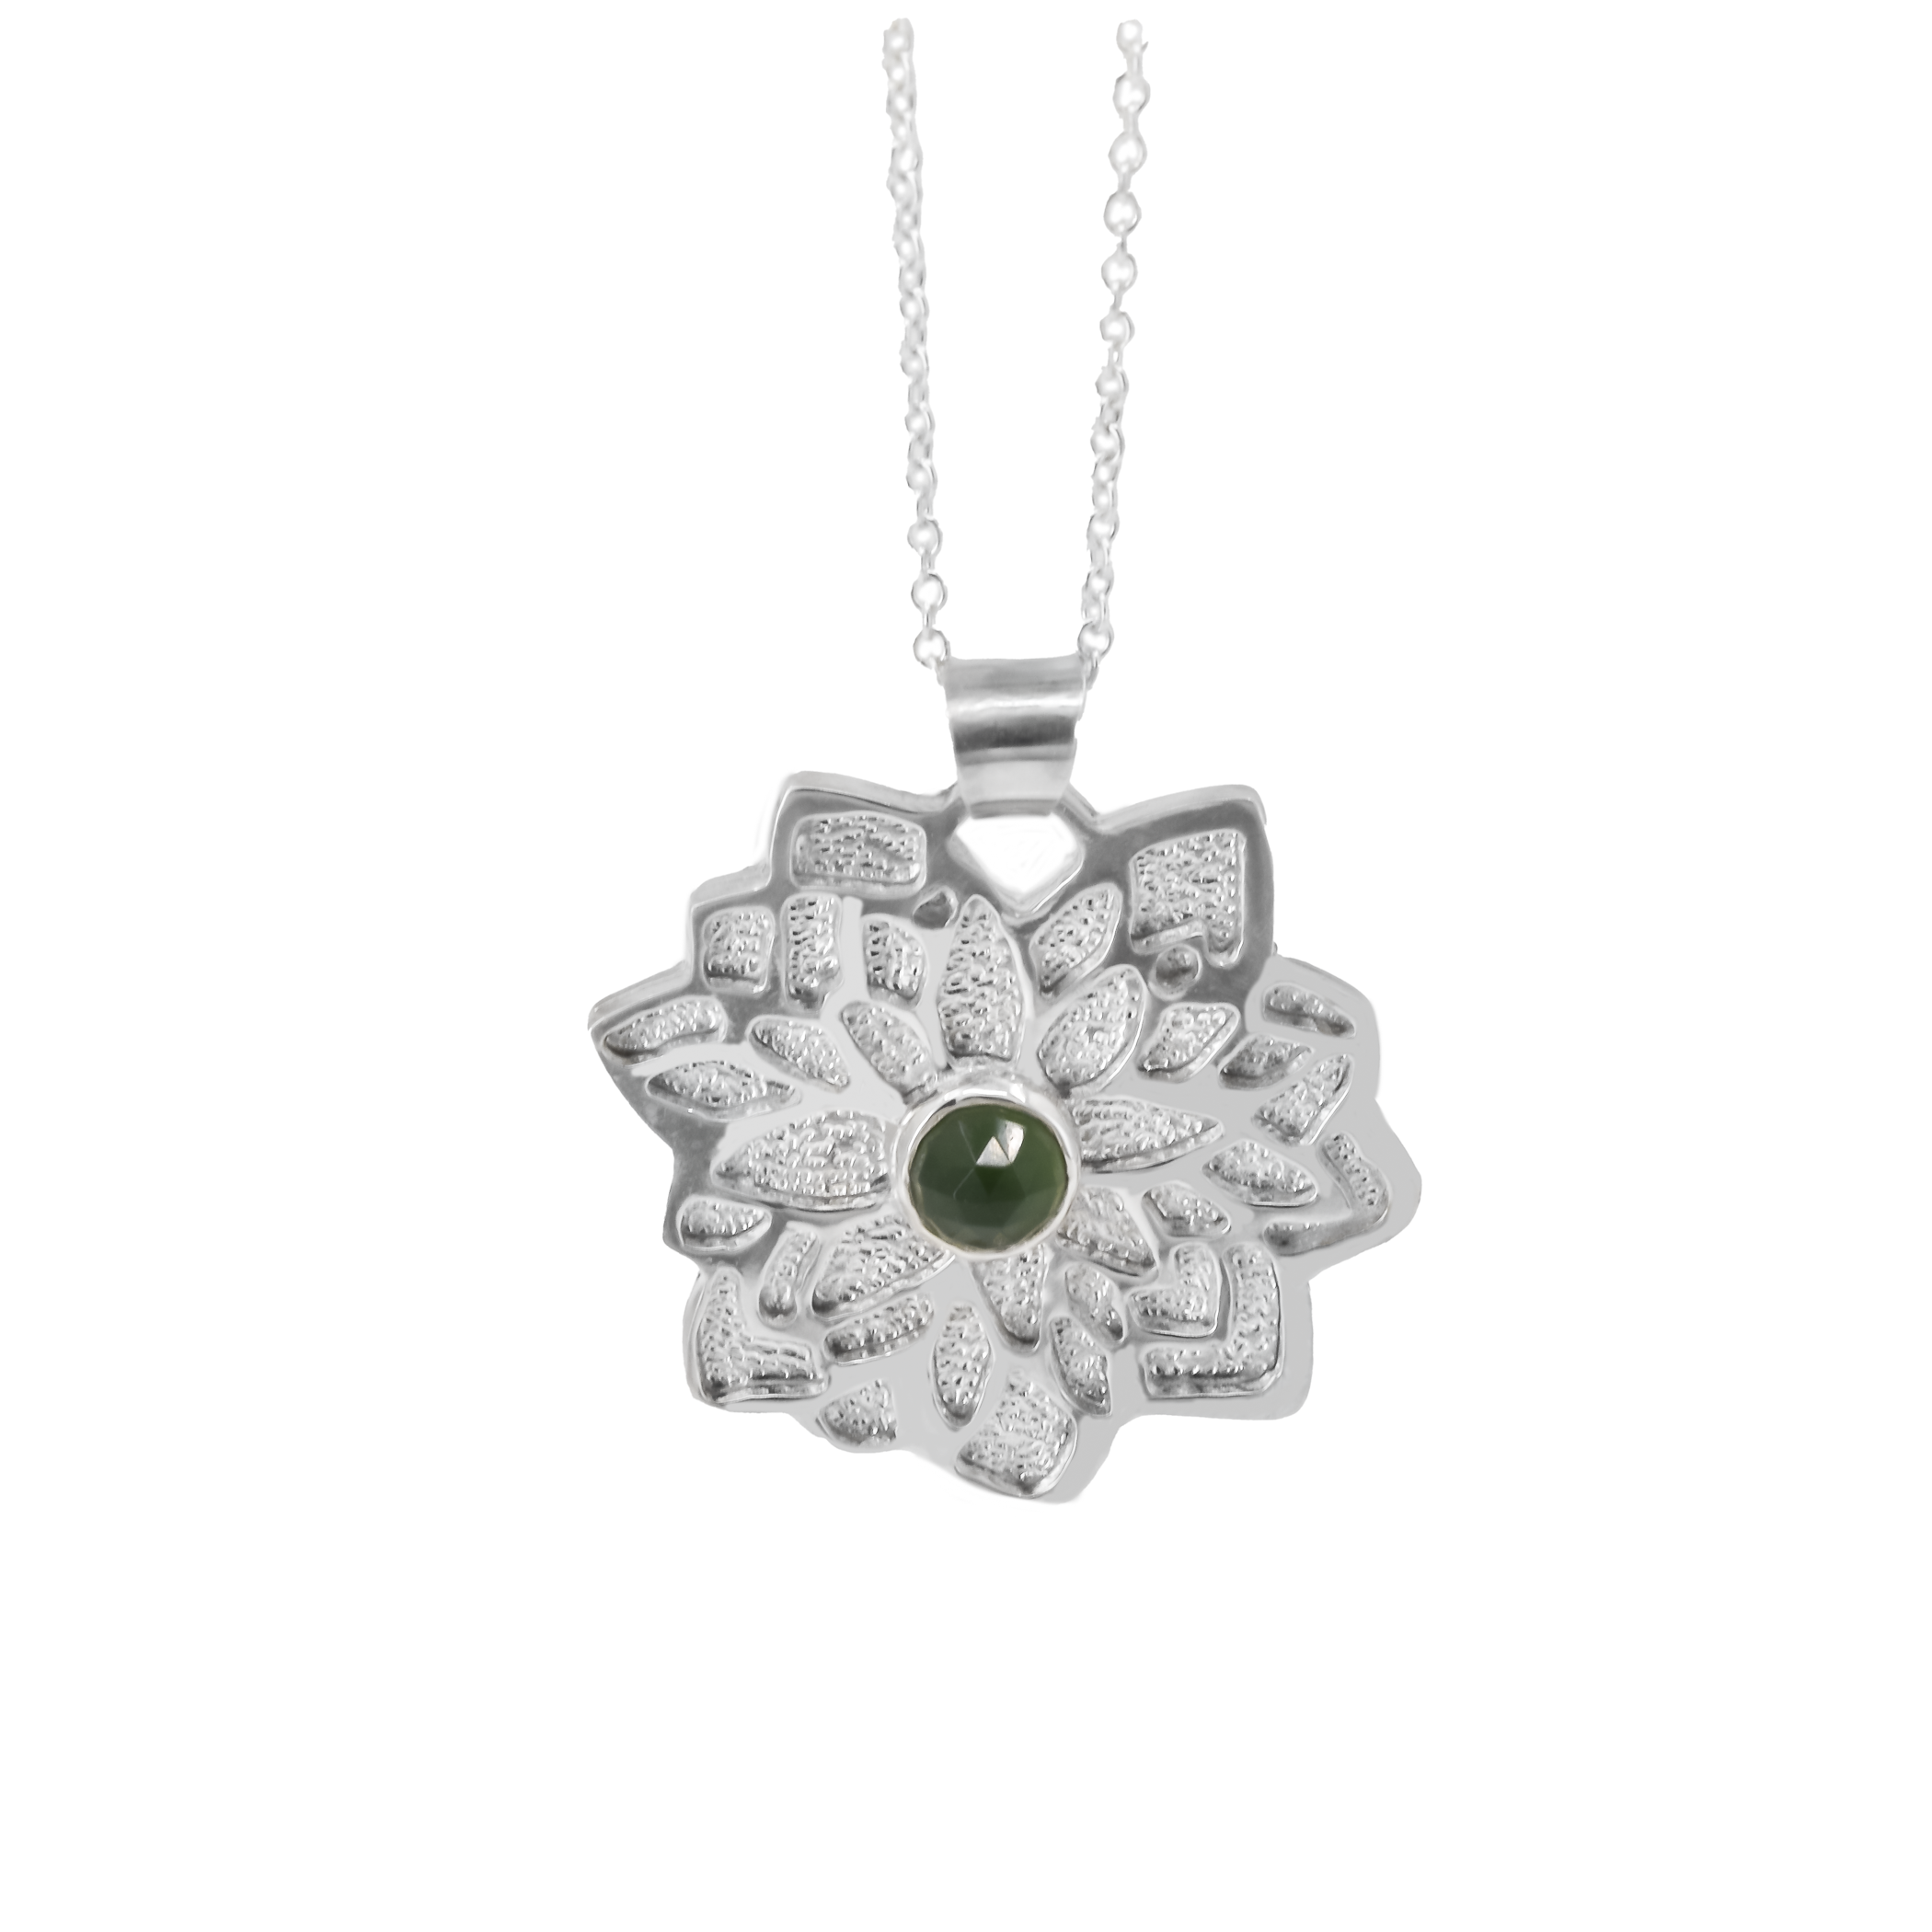 Serpentine Flower sterling silver pendant necklace